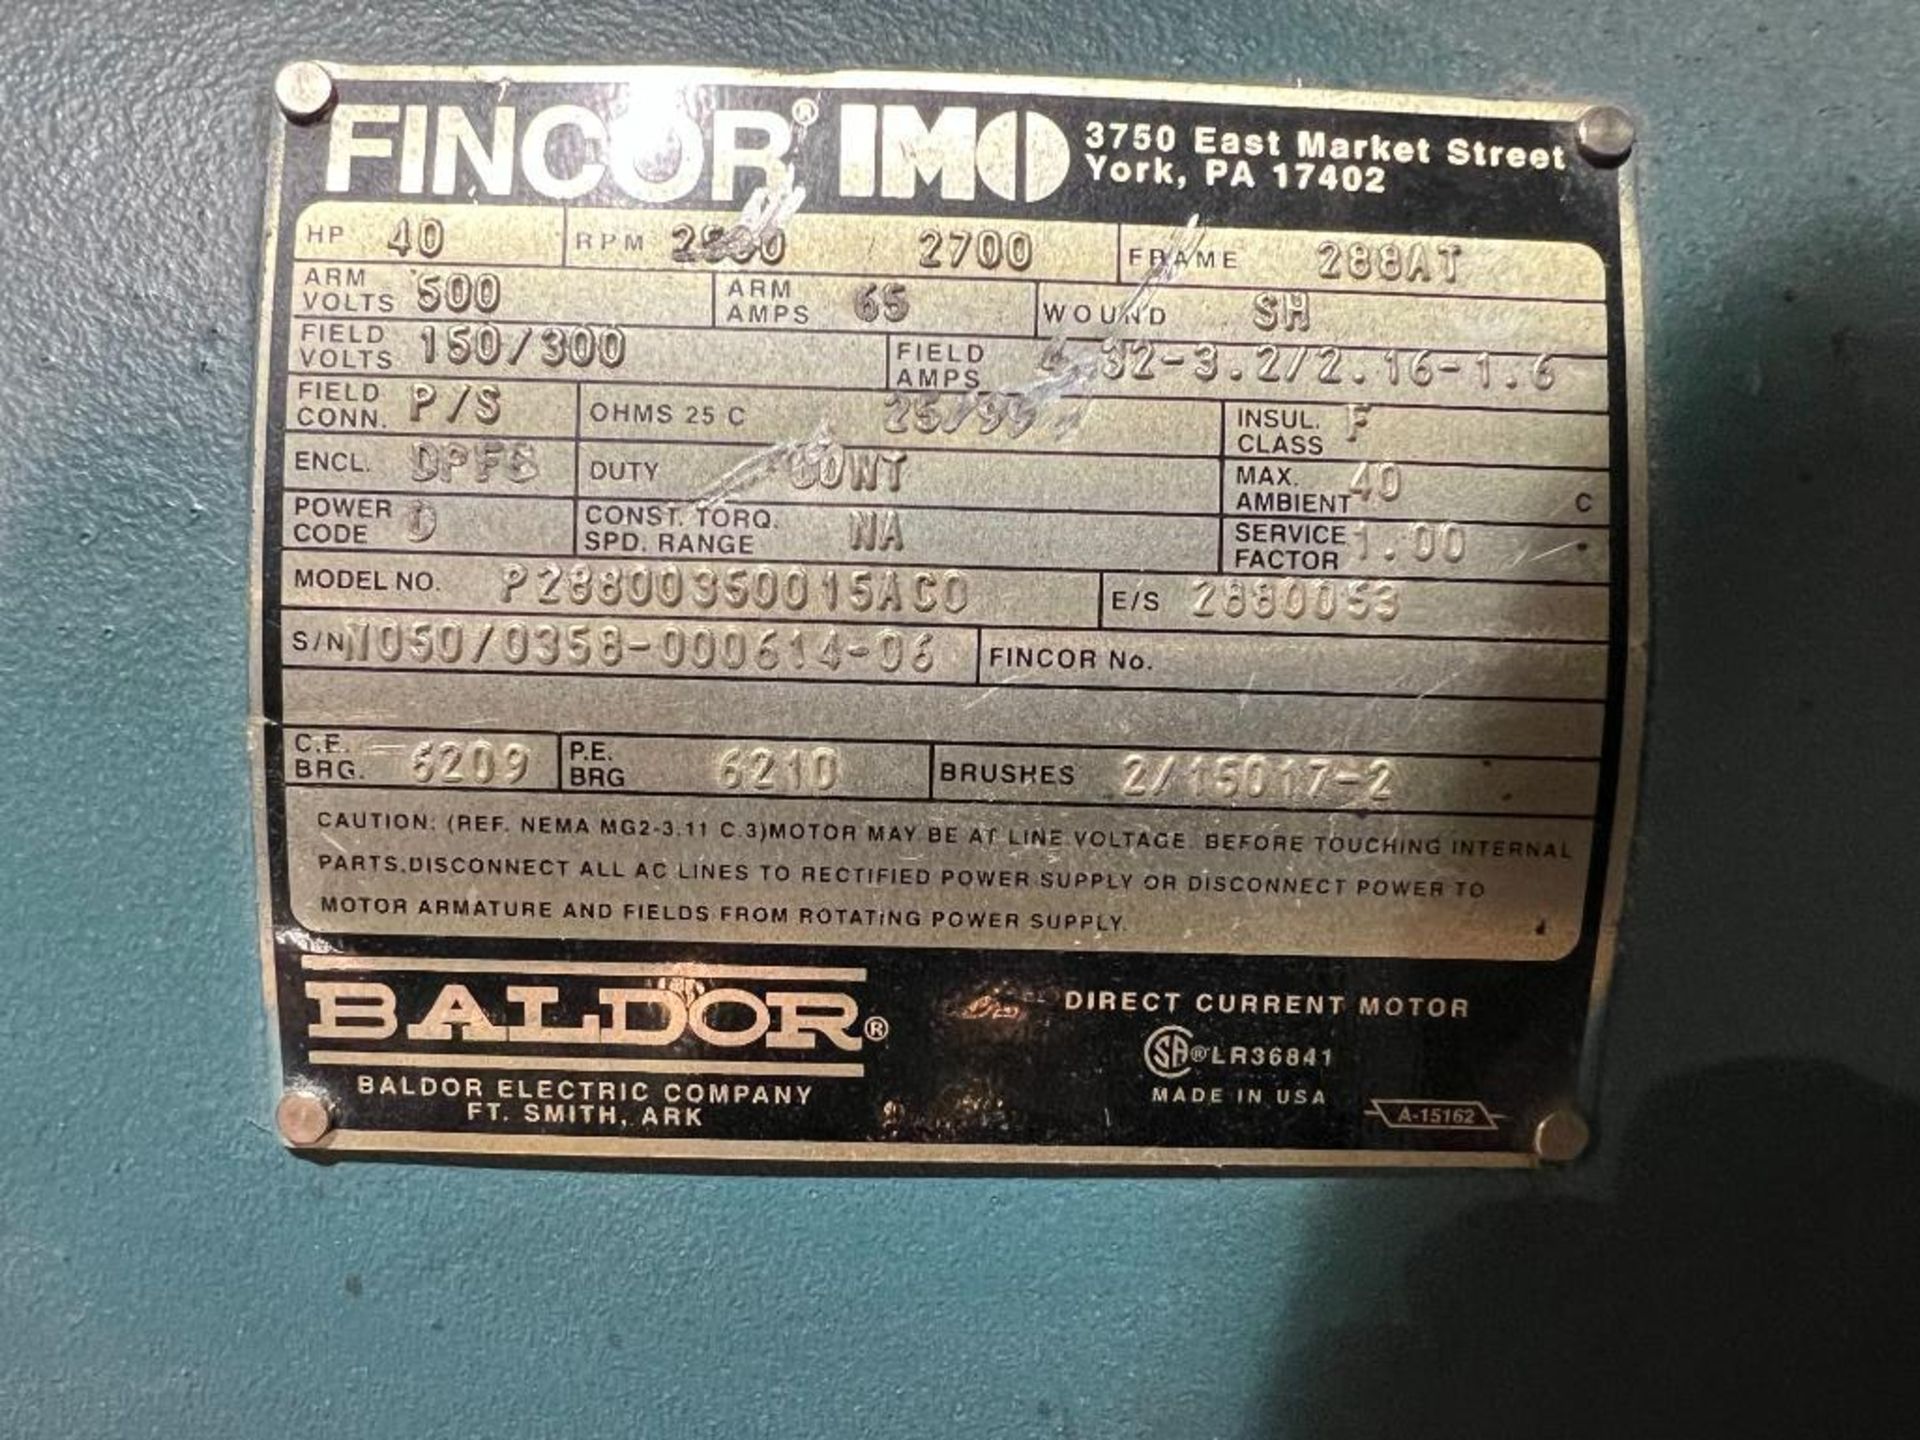 Fincor, Model P28800350015aco, 40 Hp Motor - Image 4 of 4